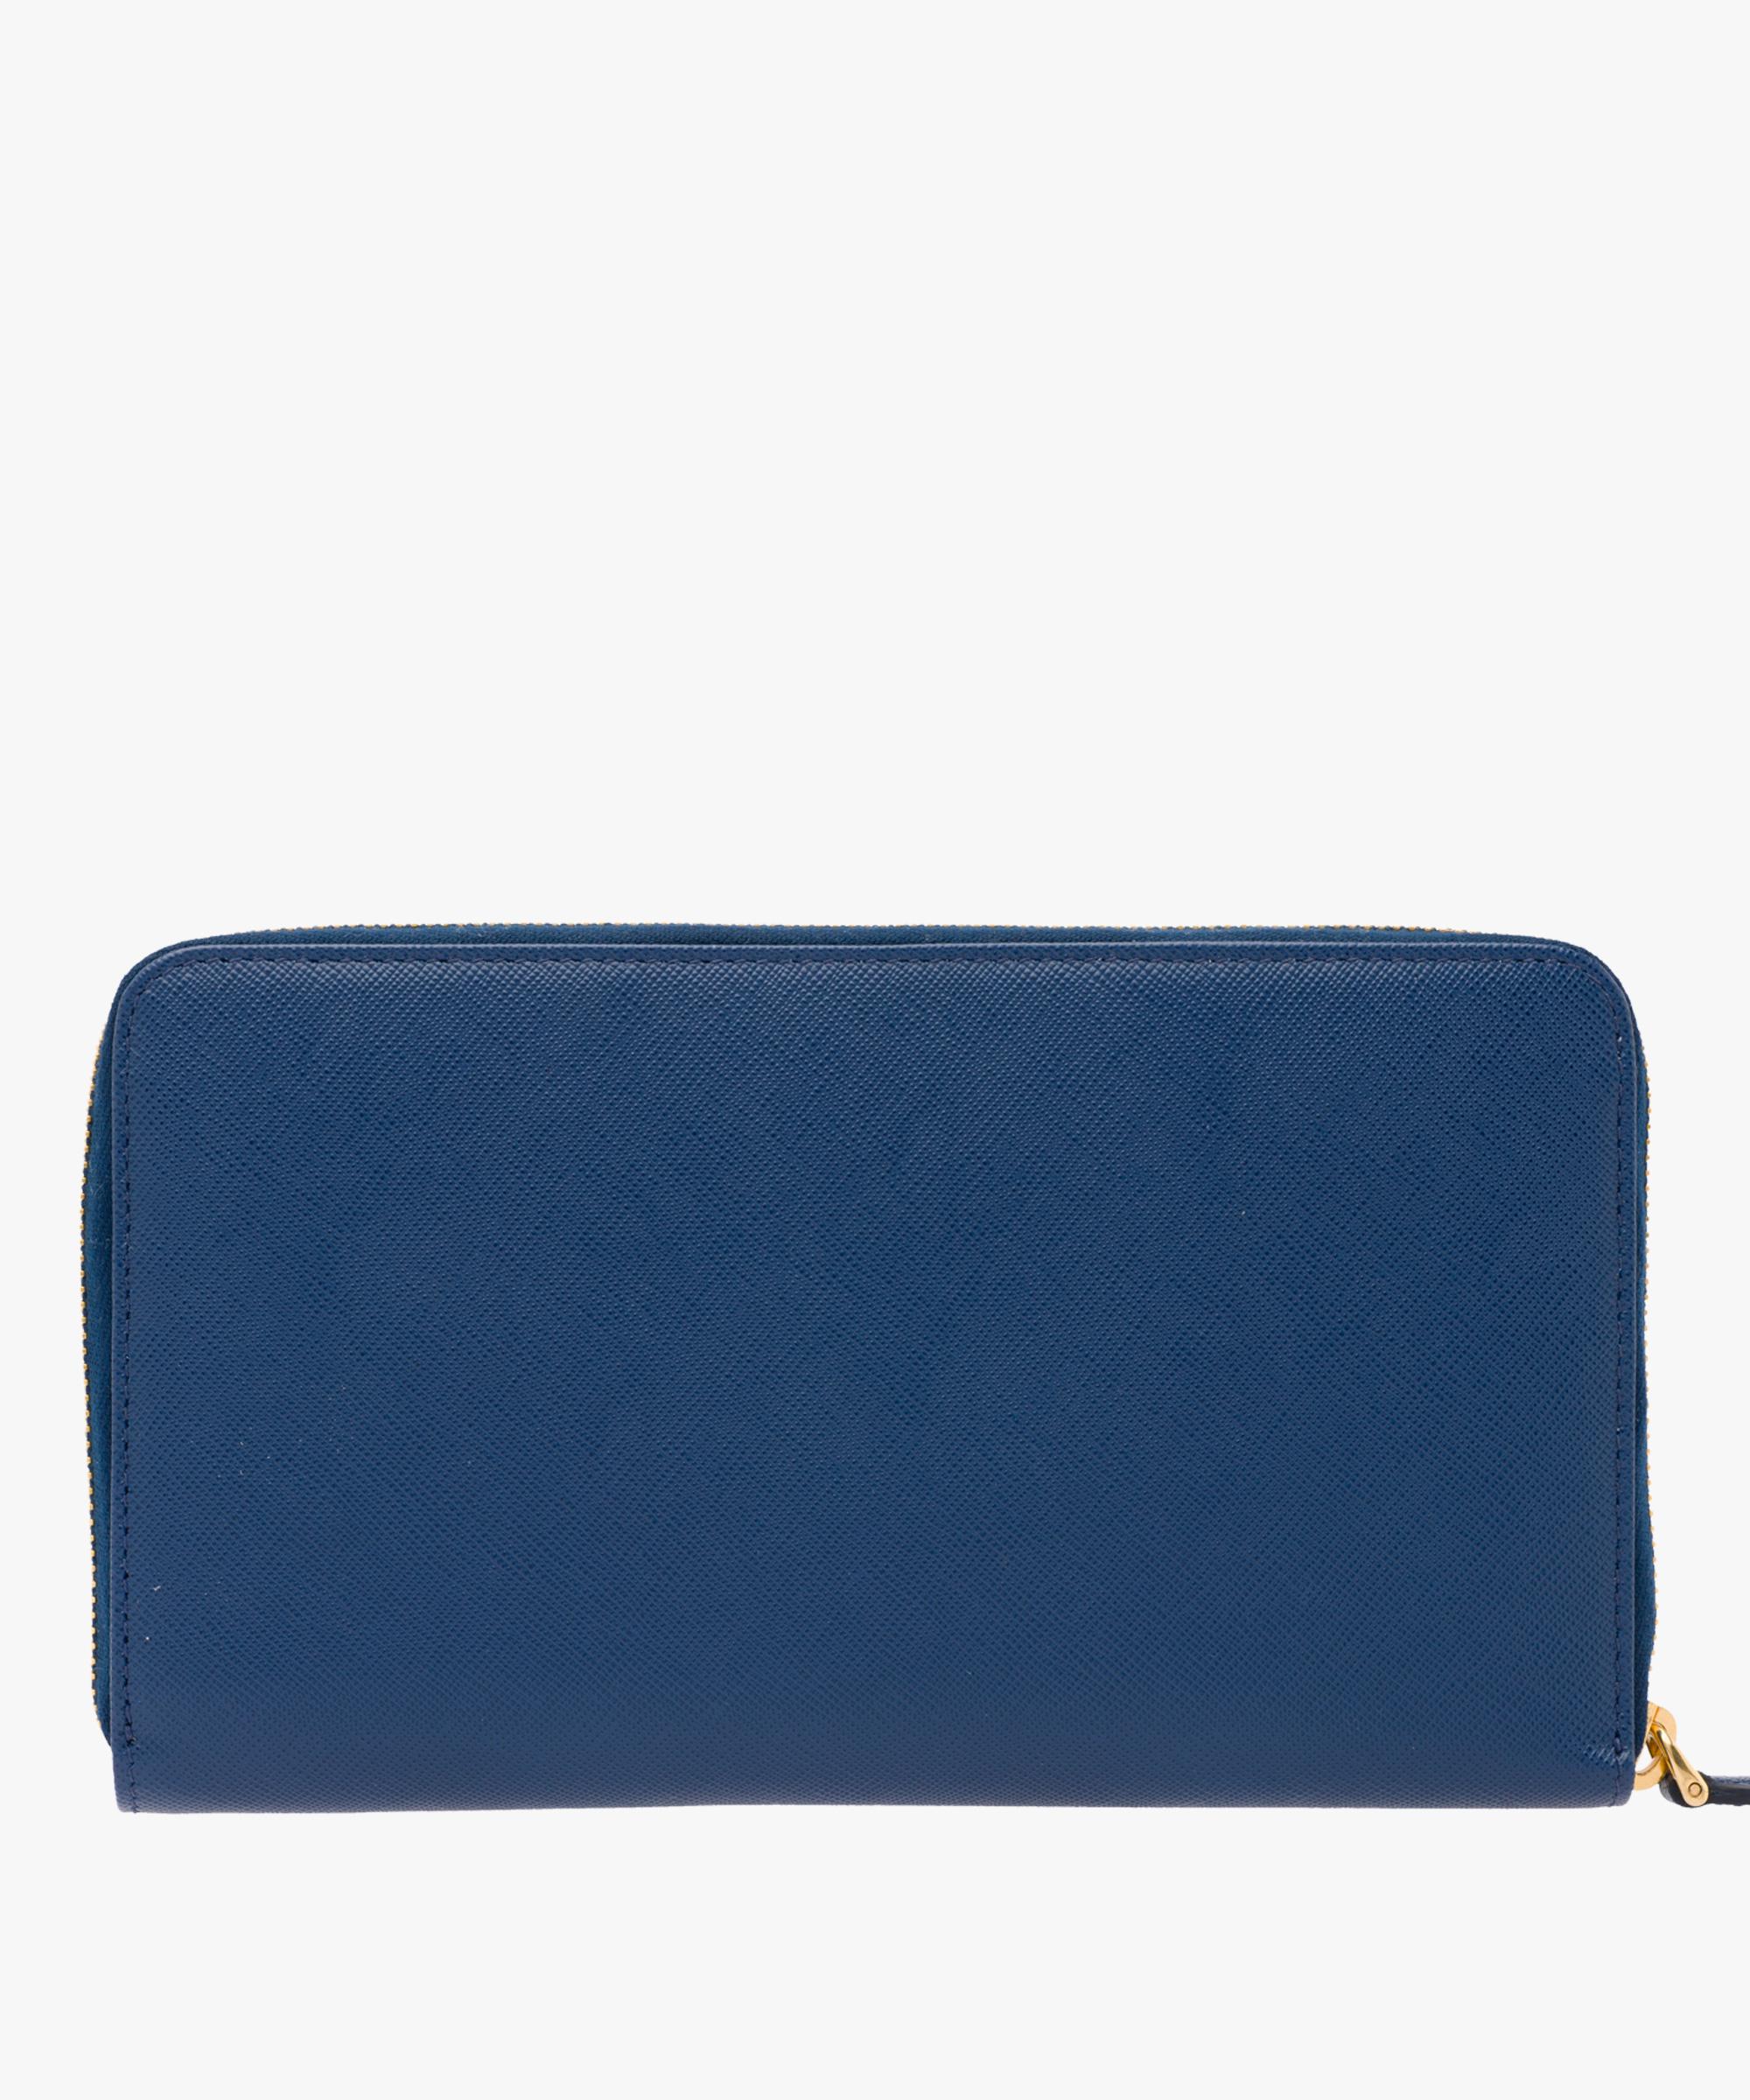 Prada Large Saffiano Leather Wallet in Cornflower Blue (Blue) - Lyst